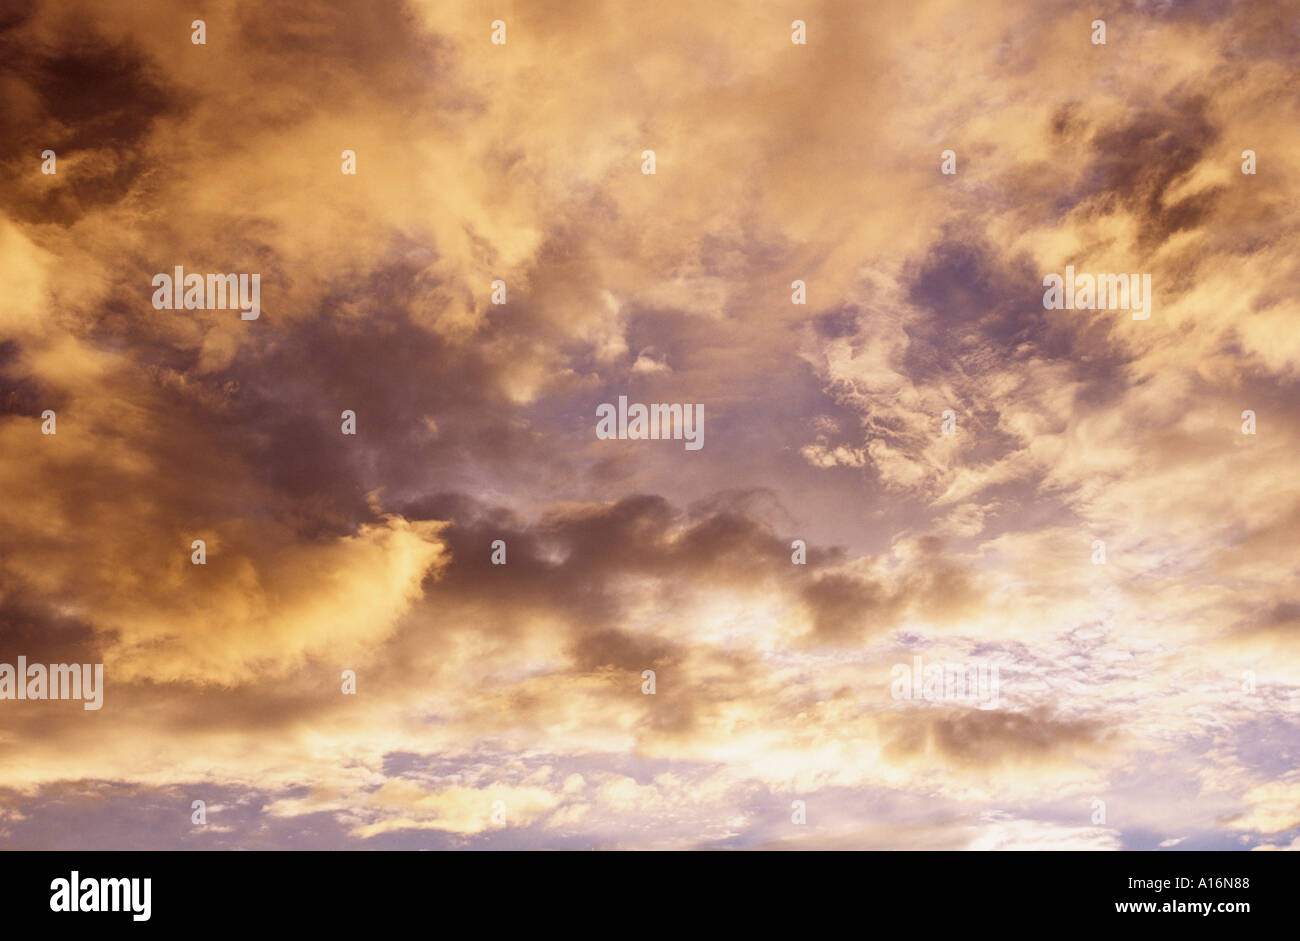 Wispy clouds lit by evening sun Stock Photo